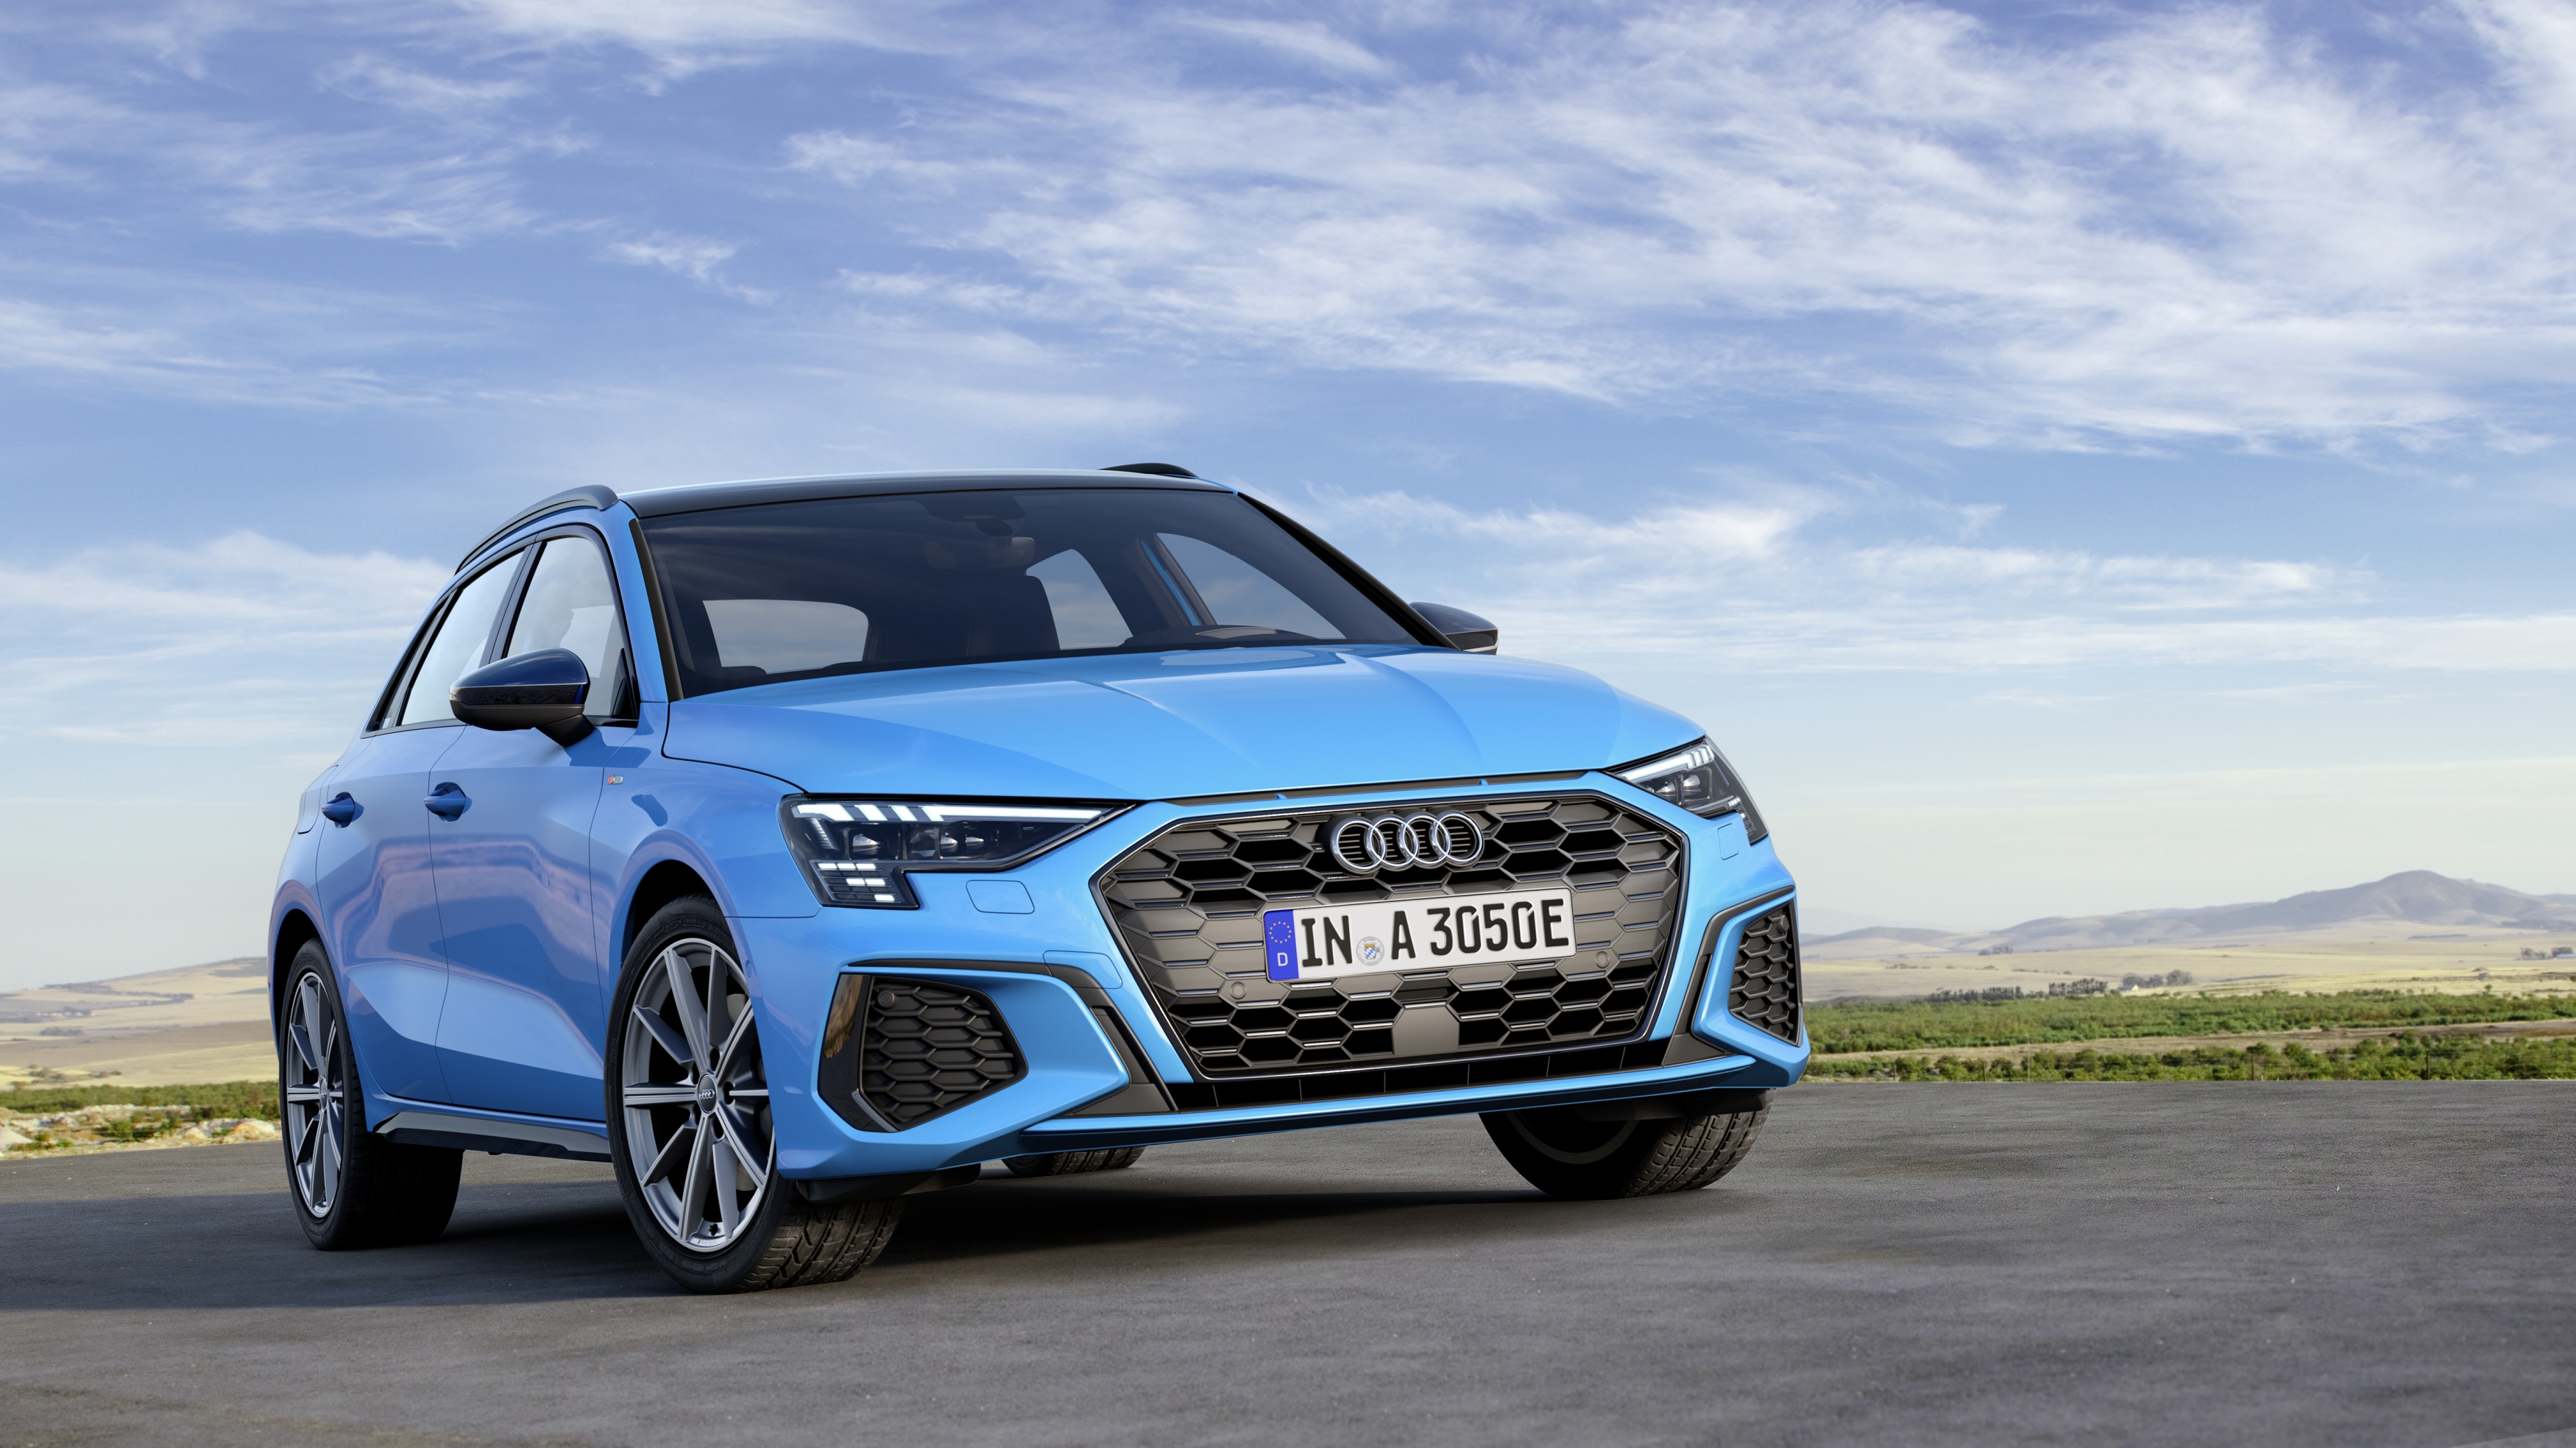 Audi A3 Sportback gains new hybrid engine option